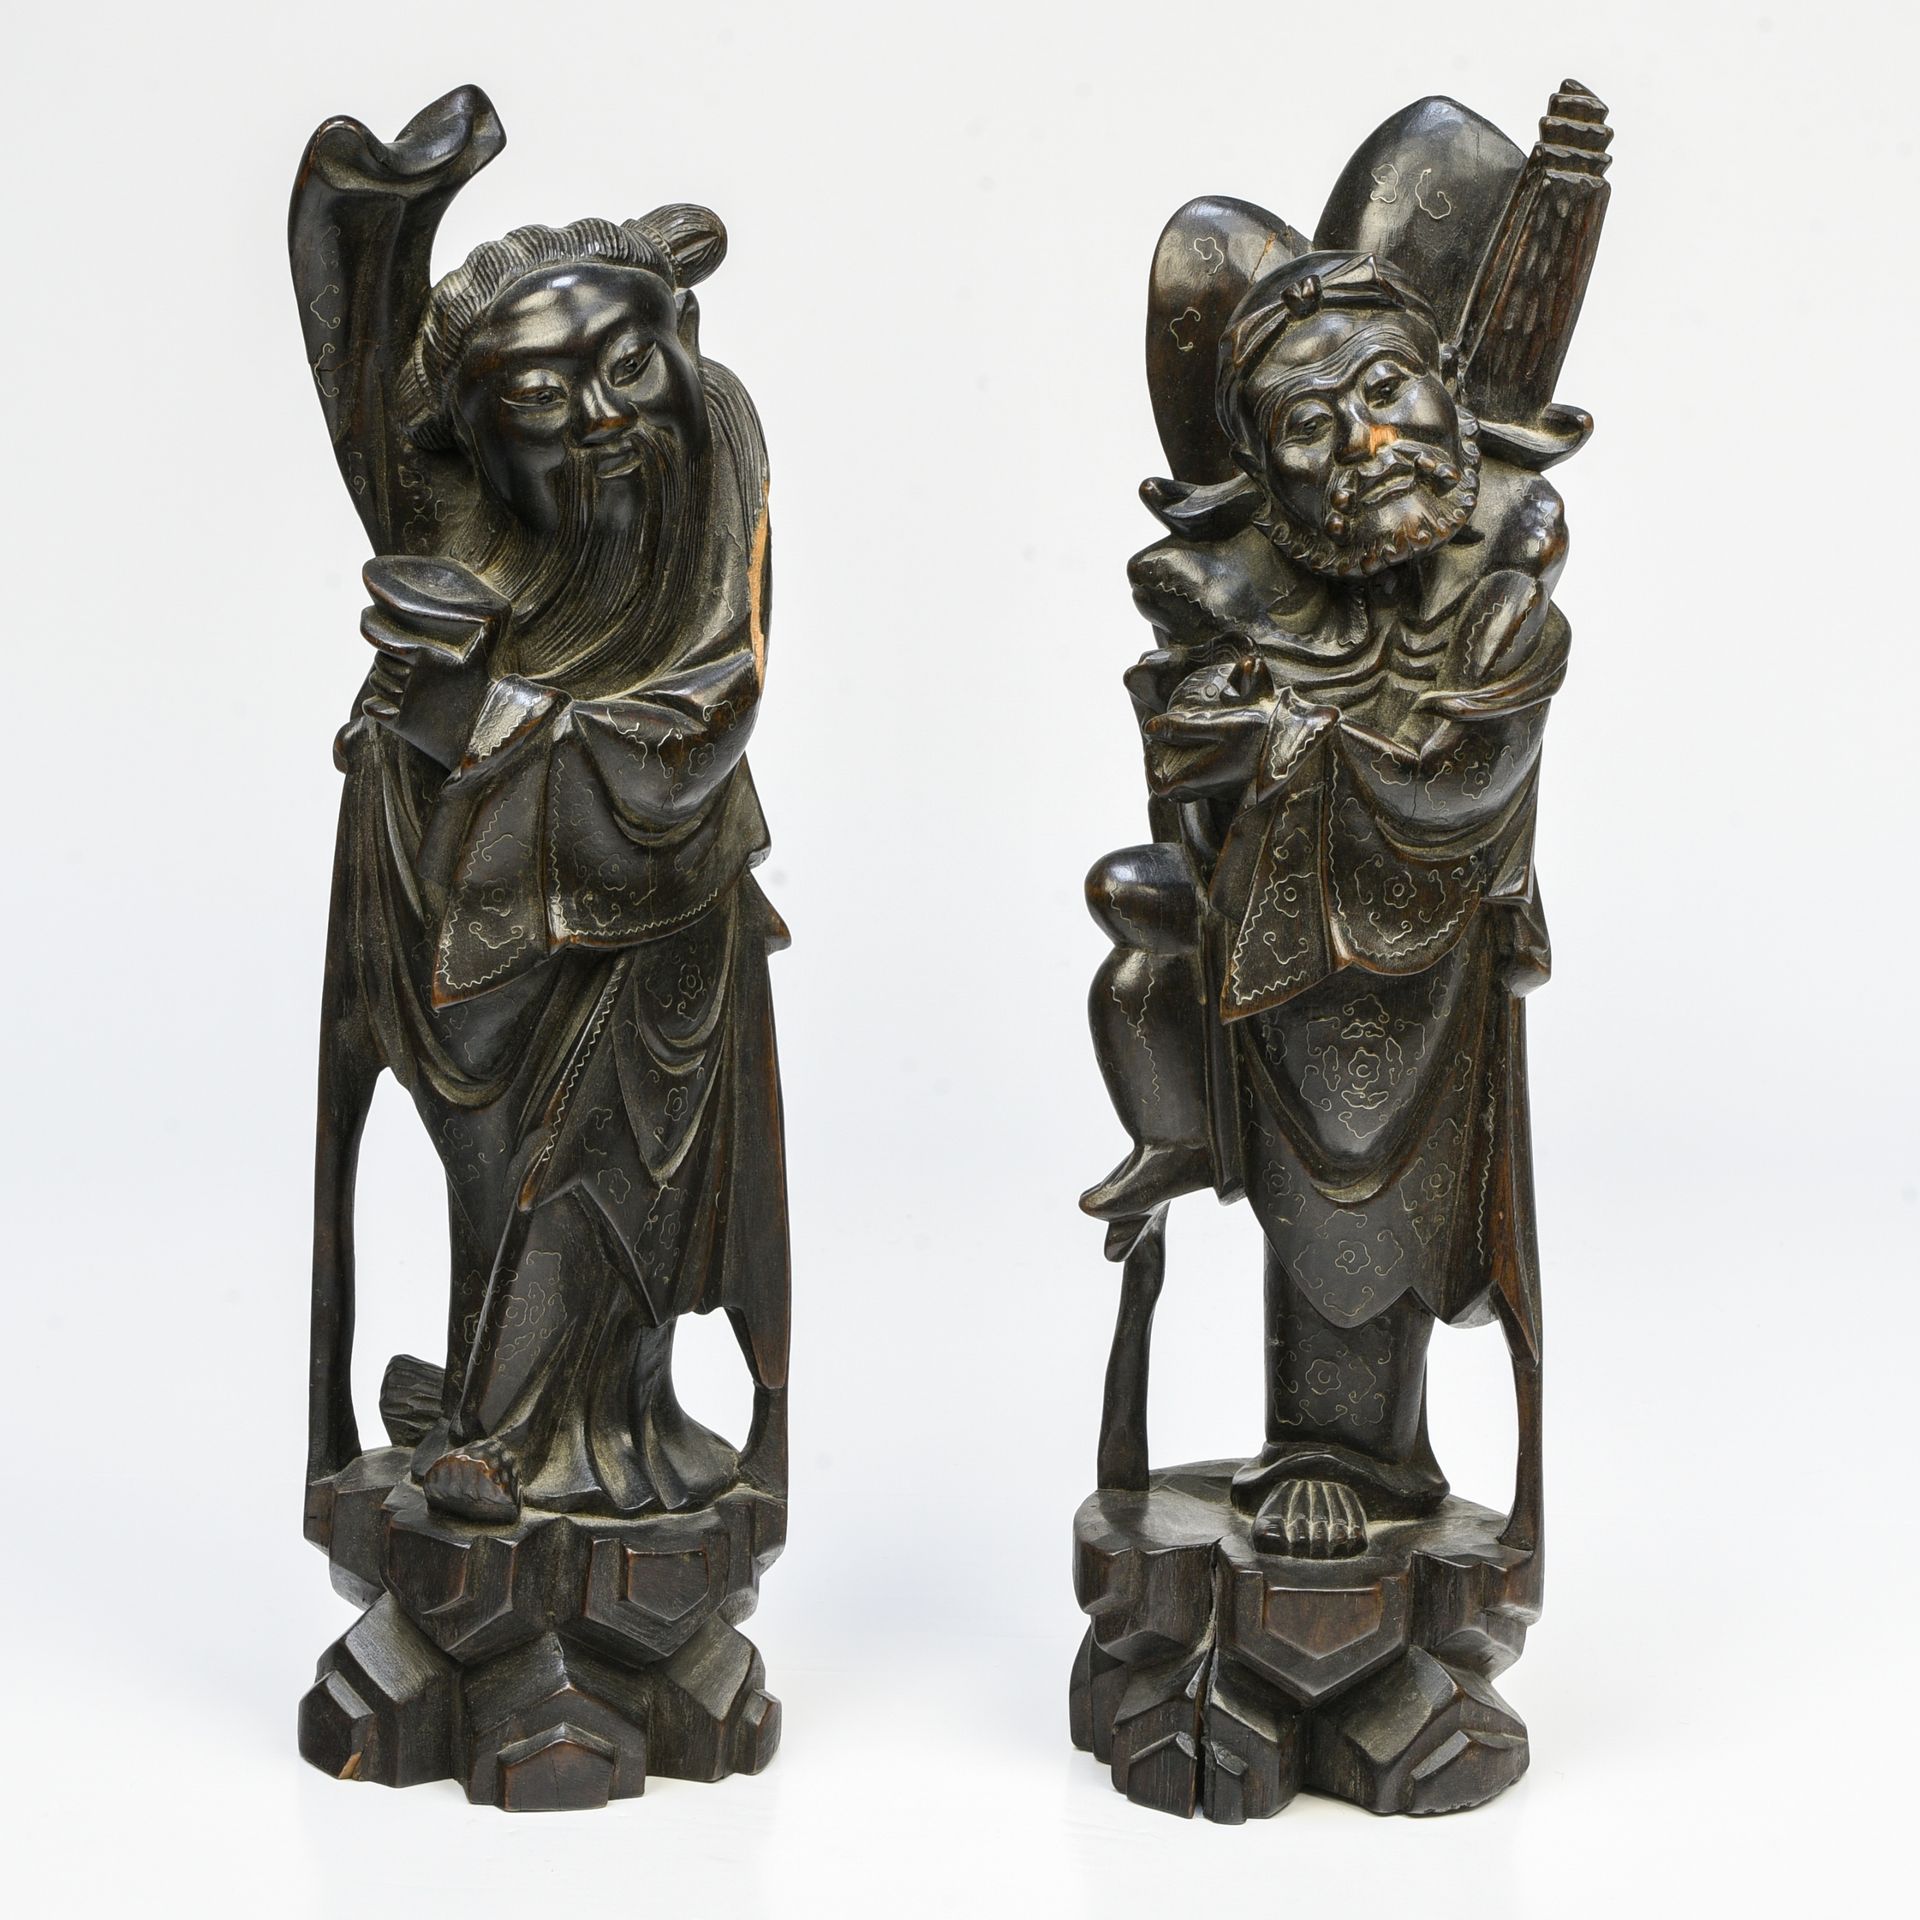 Null 中国--20世纪初

李铁拐和钱中利两尊神仙像



镶嵌着银线的木制雕像，站在一块岩石上。



专家：Cabinet Portier

事故 高：&hellip;